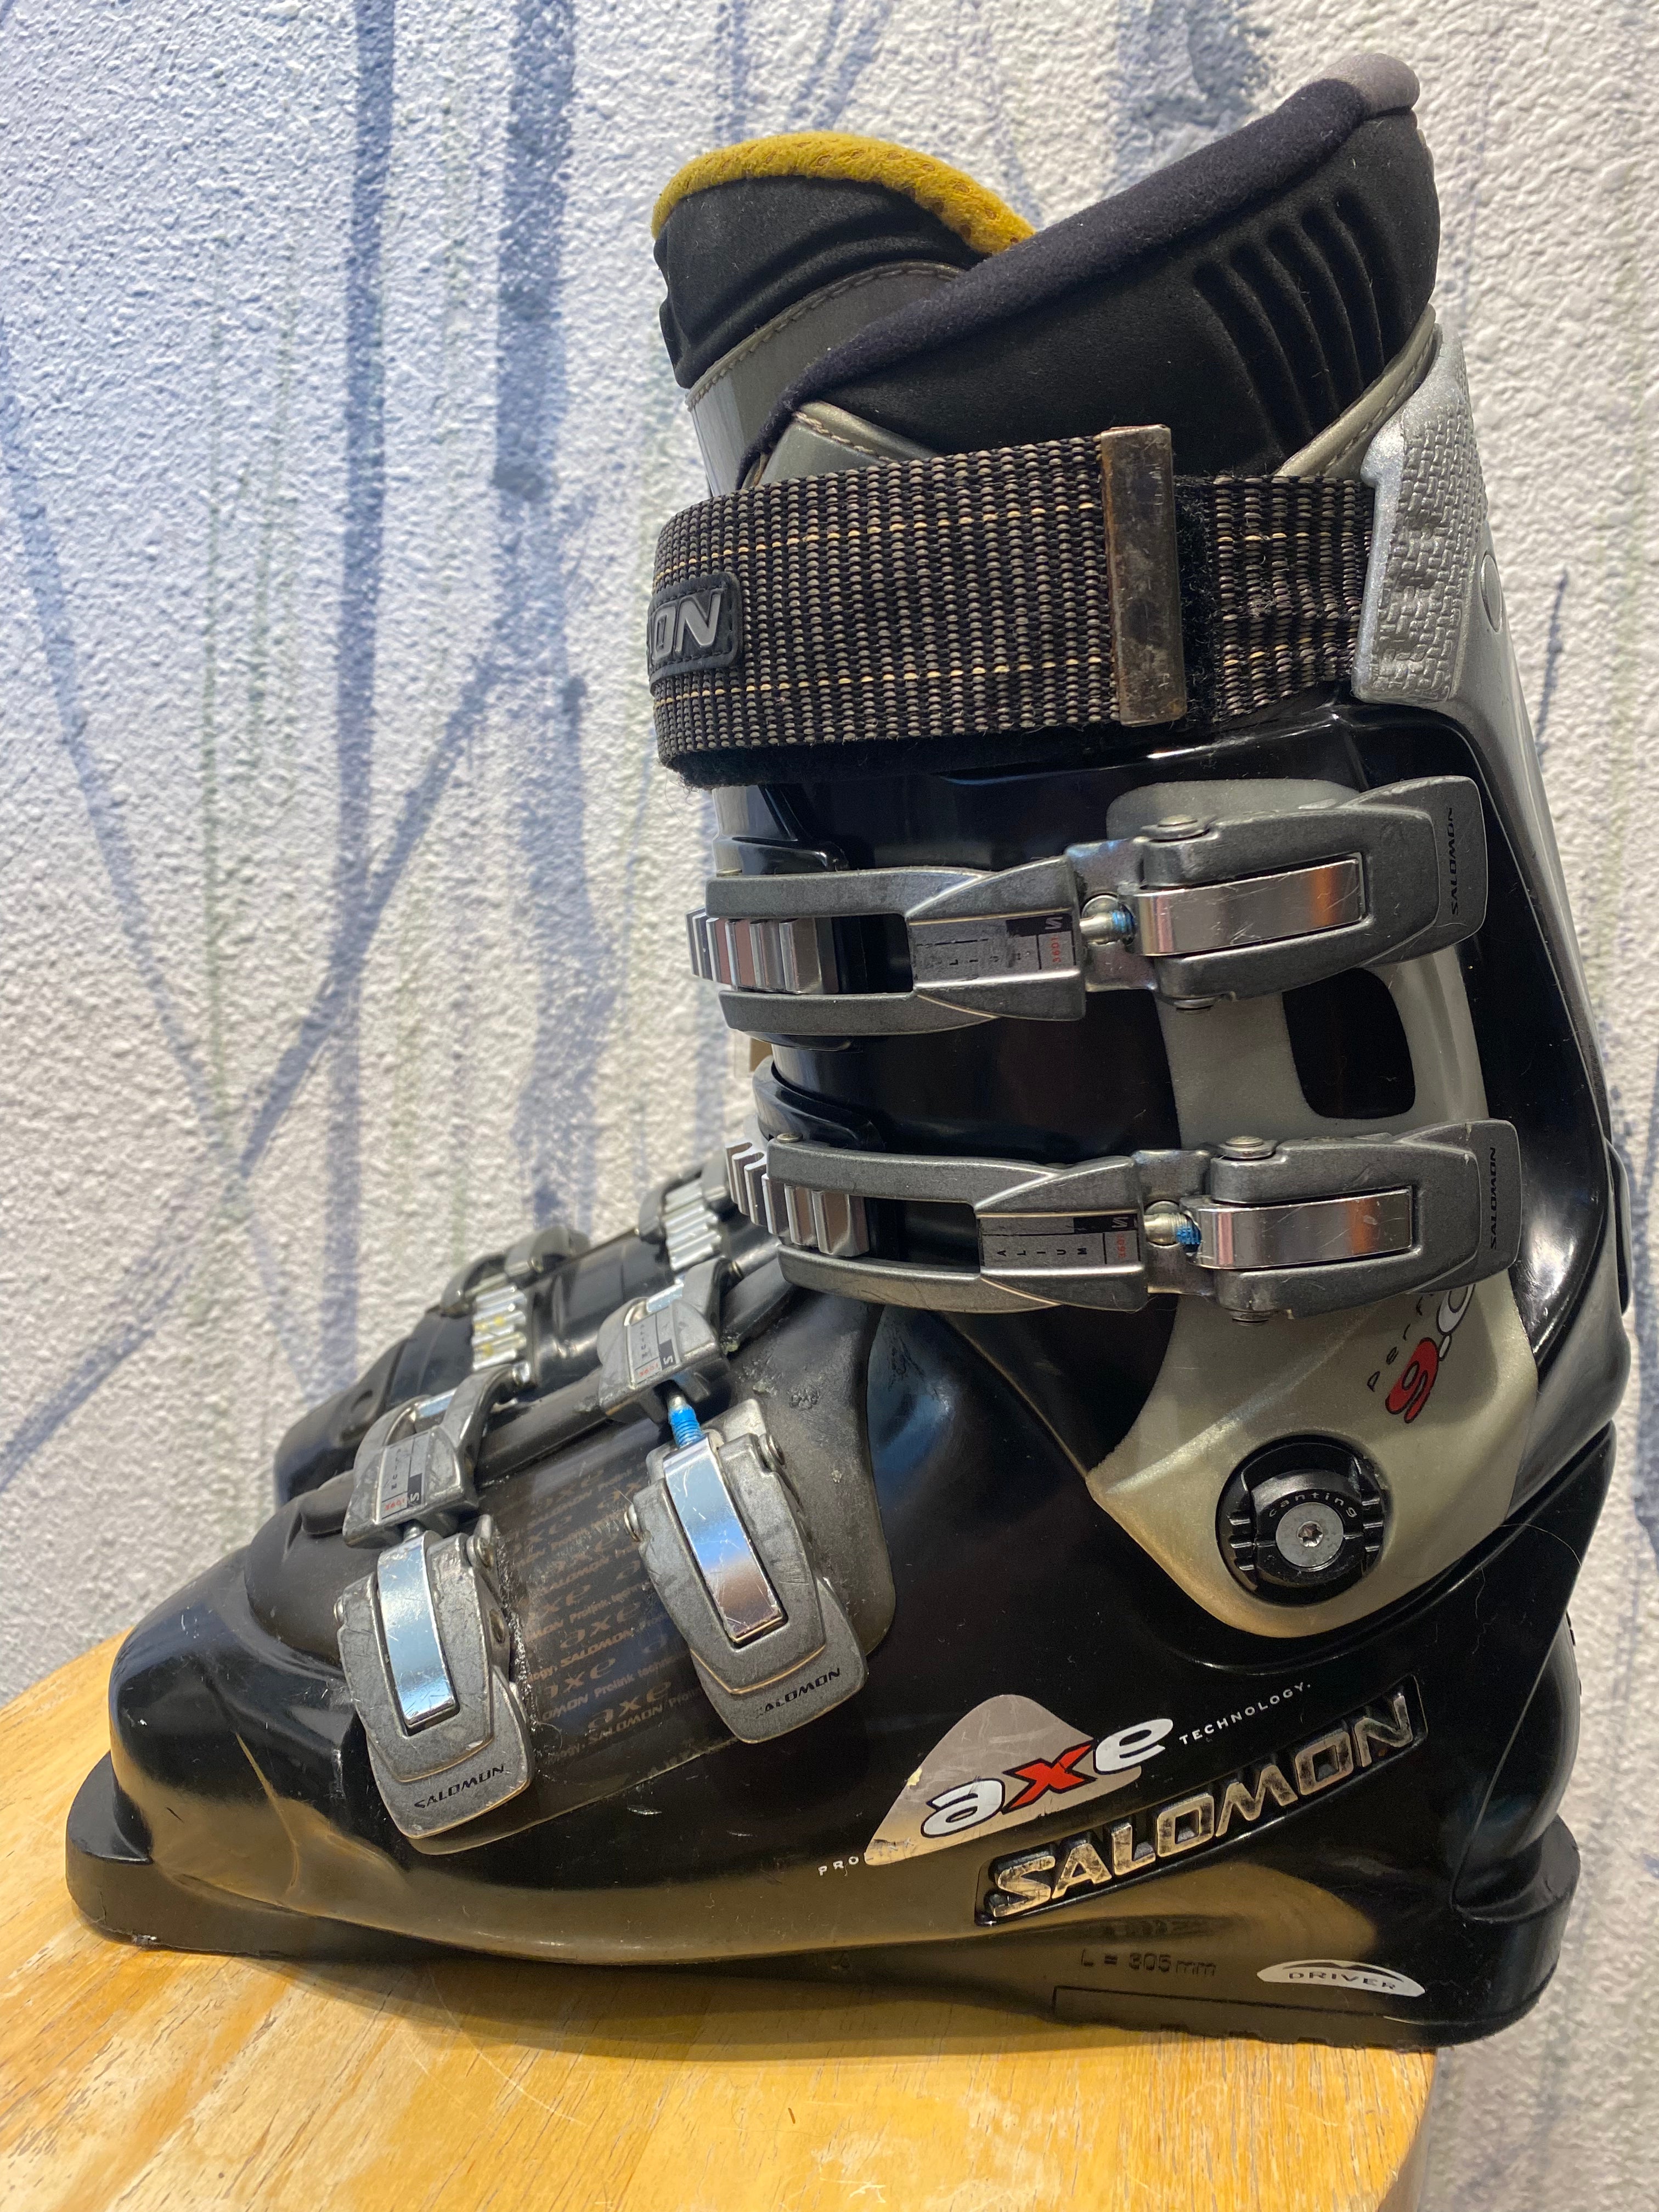 leef ermee Uitputting Trein Salomon Prolink Axe Technology Alpine Ski Boots - Black, 26/26.5